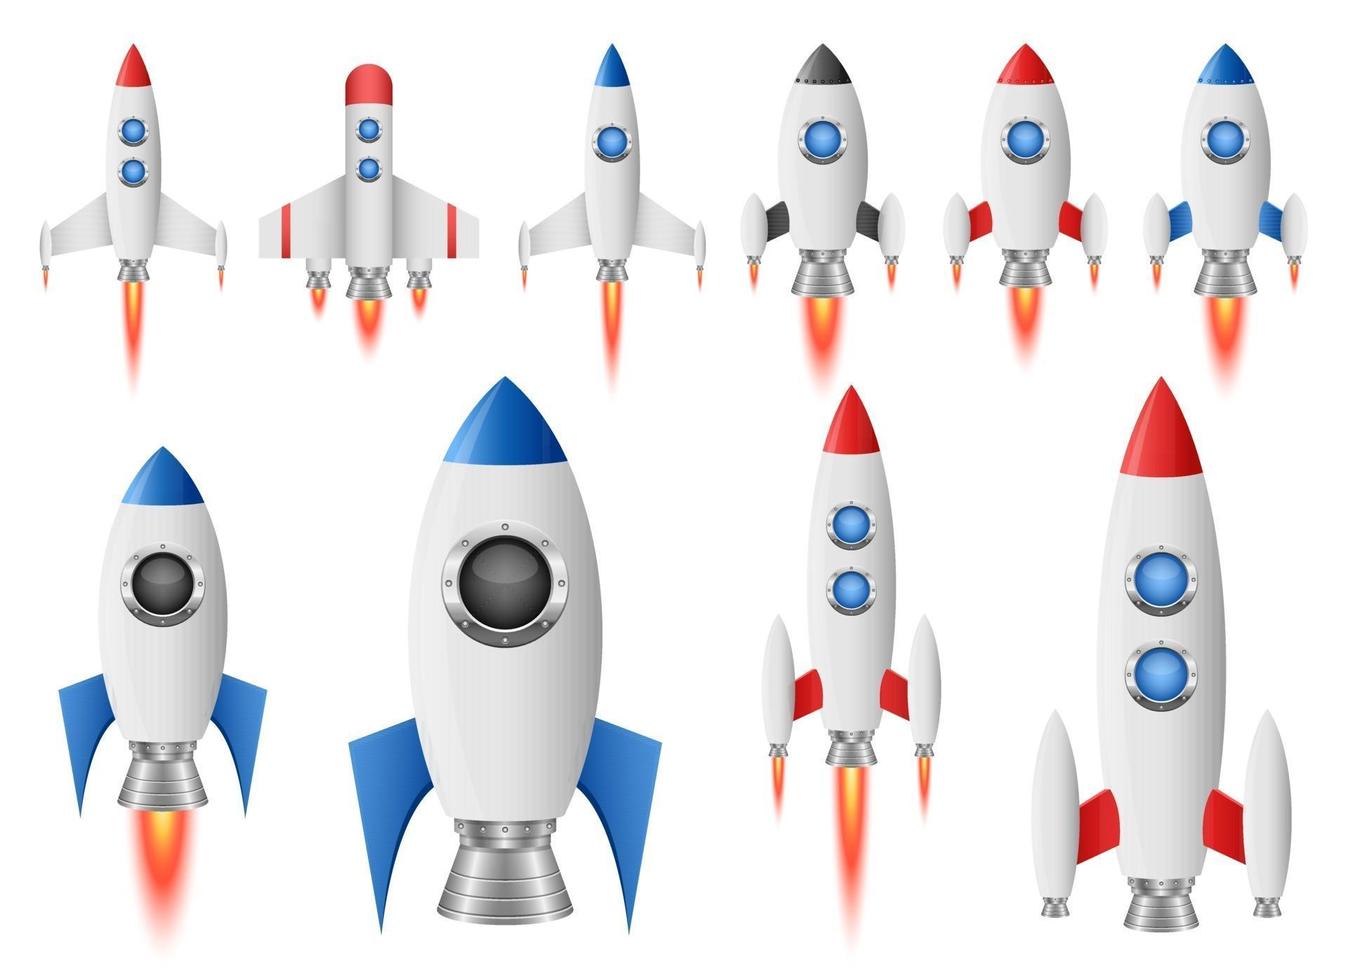 Rocket spaceship vector design illustration set isolated on white background